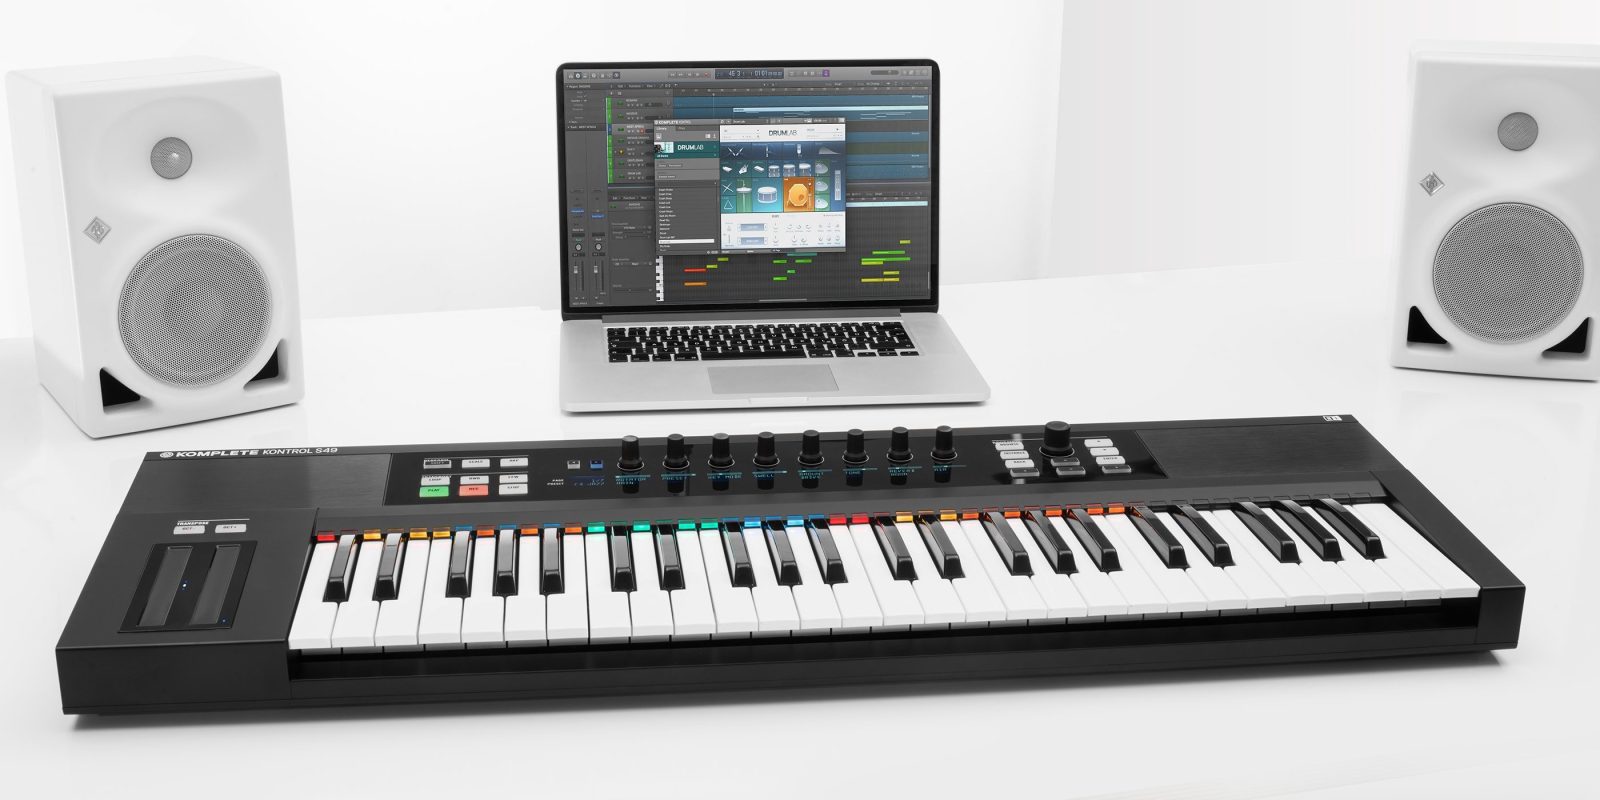 Apple Piano Keyboard For Mac 2018